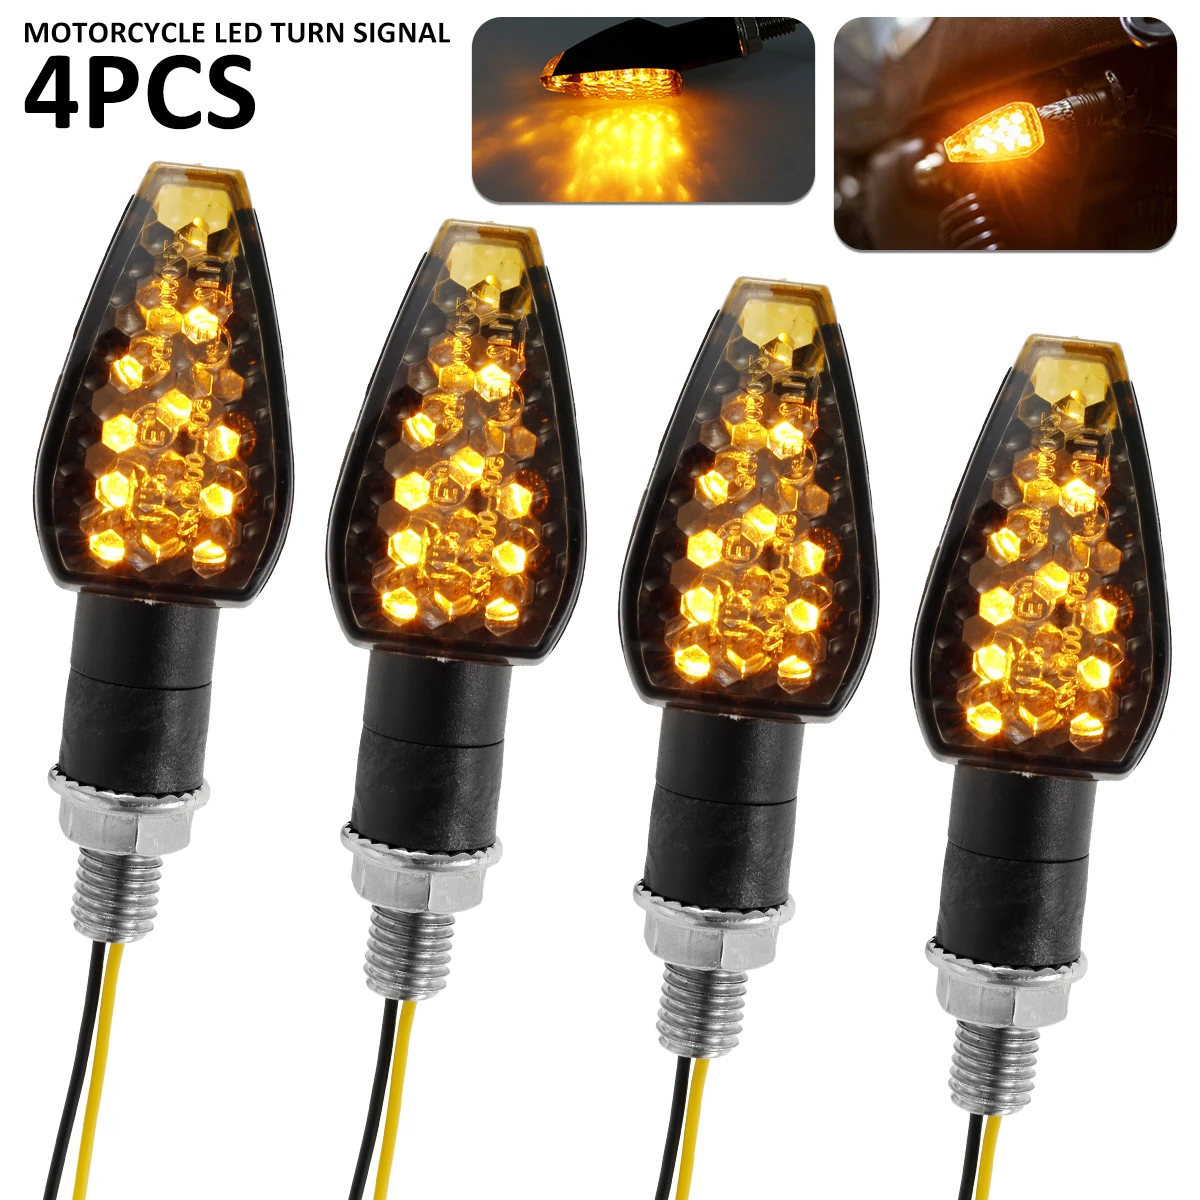 4pcs Universal Motorcycle Yellow Amber LED Carbon Turn Signal Blinker Light